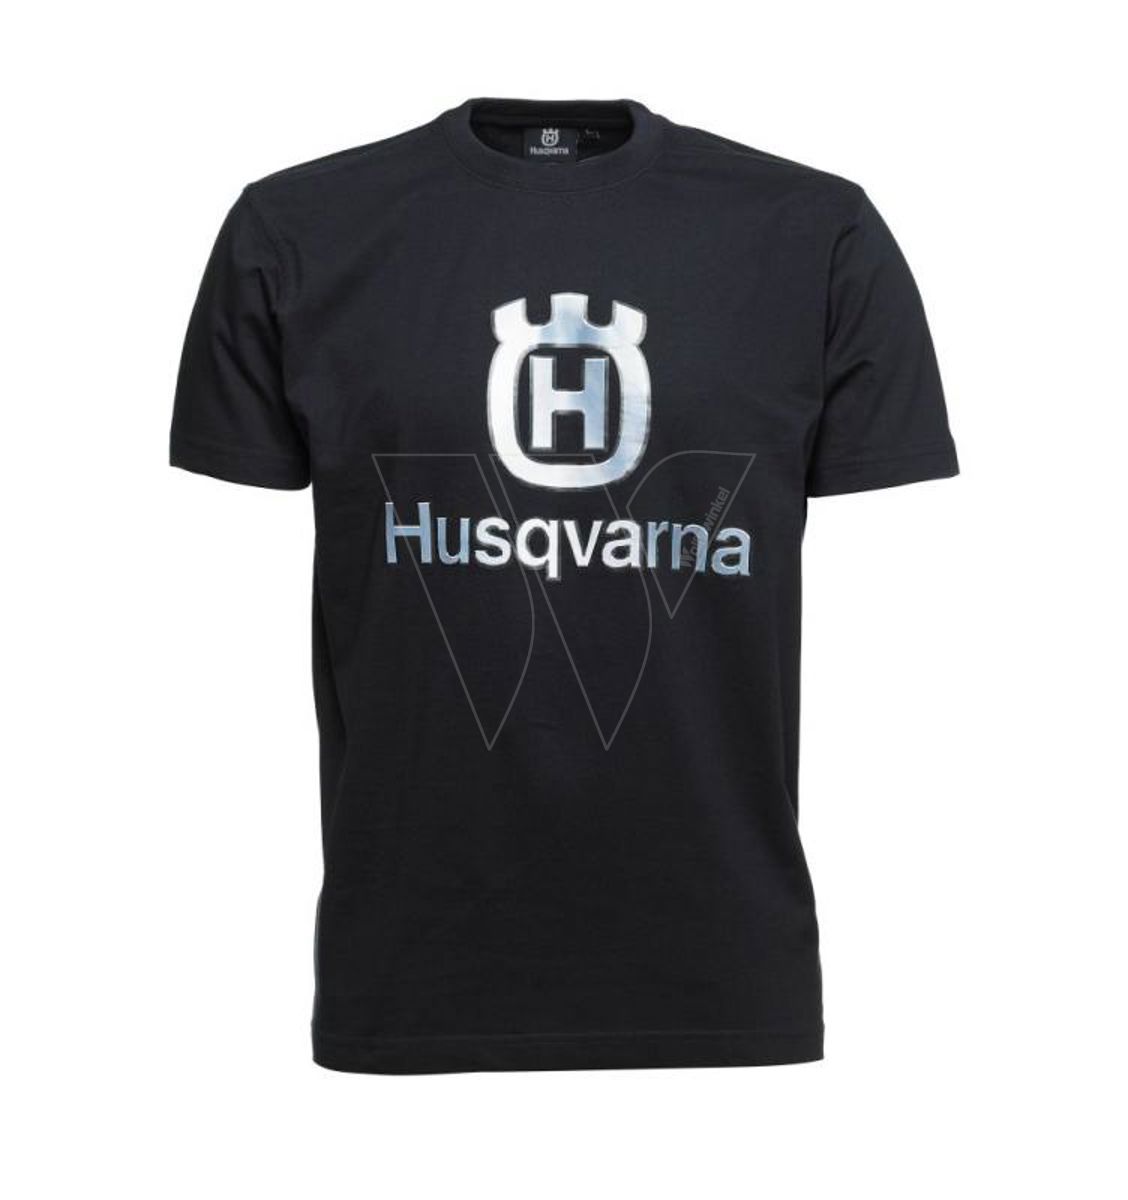 Husqvarna t-shirt groot logo - xxl